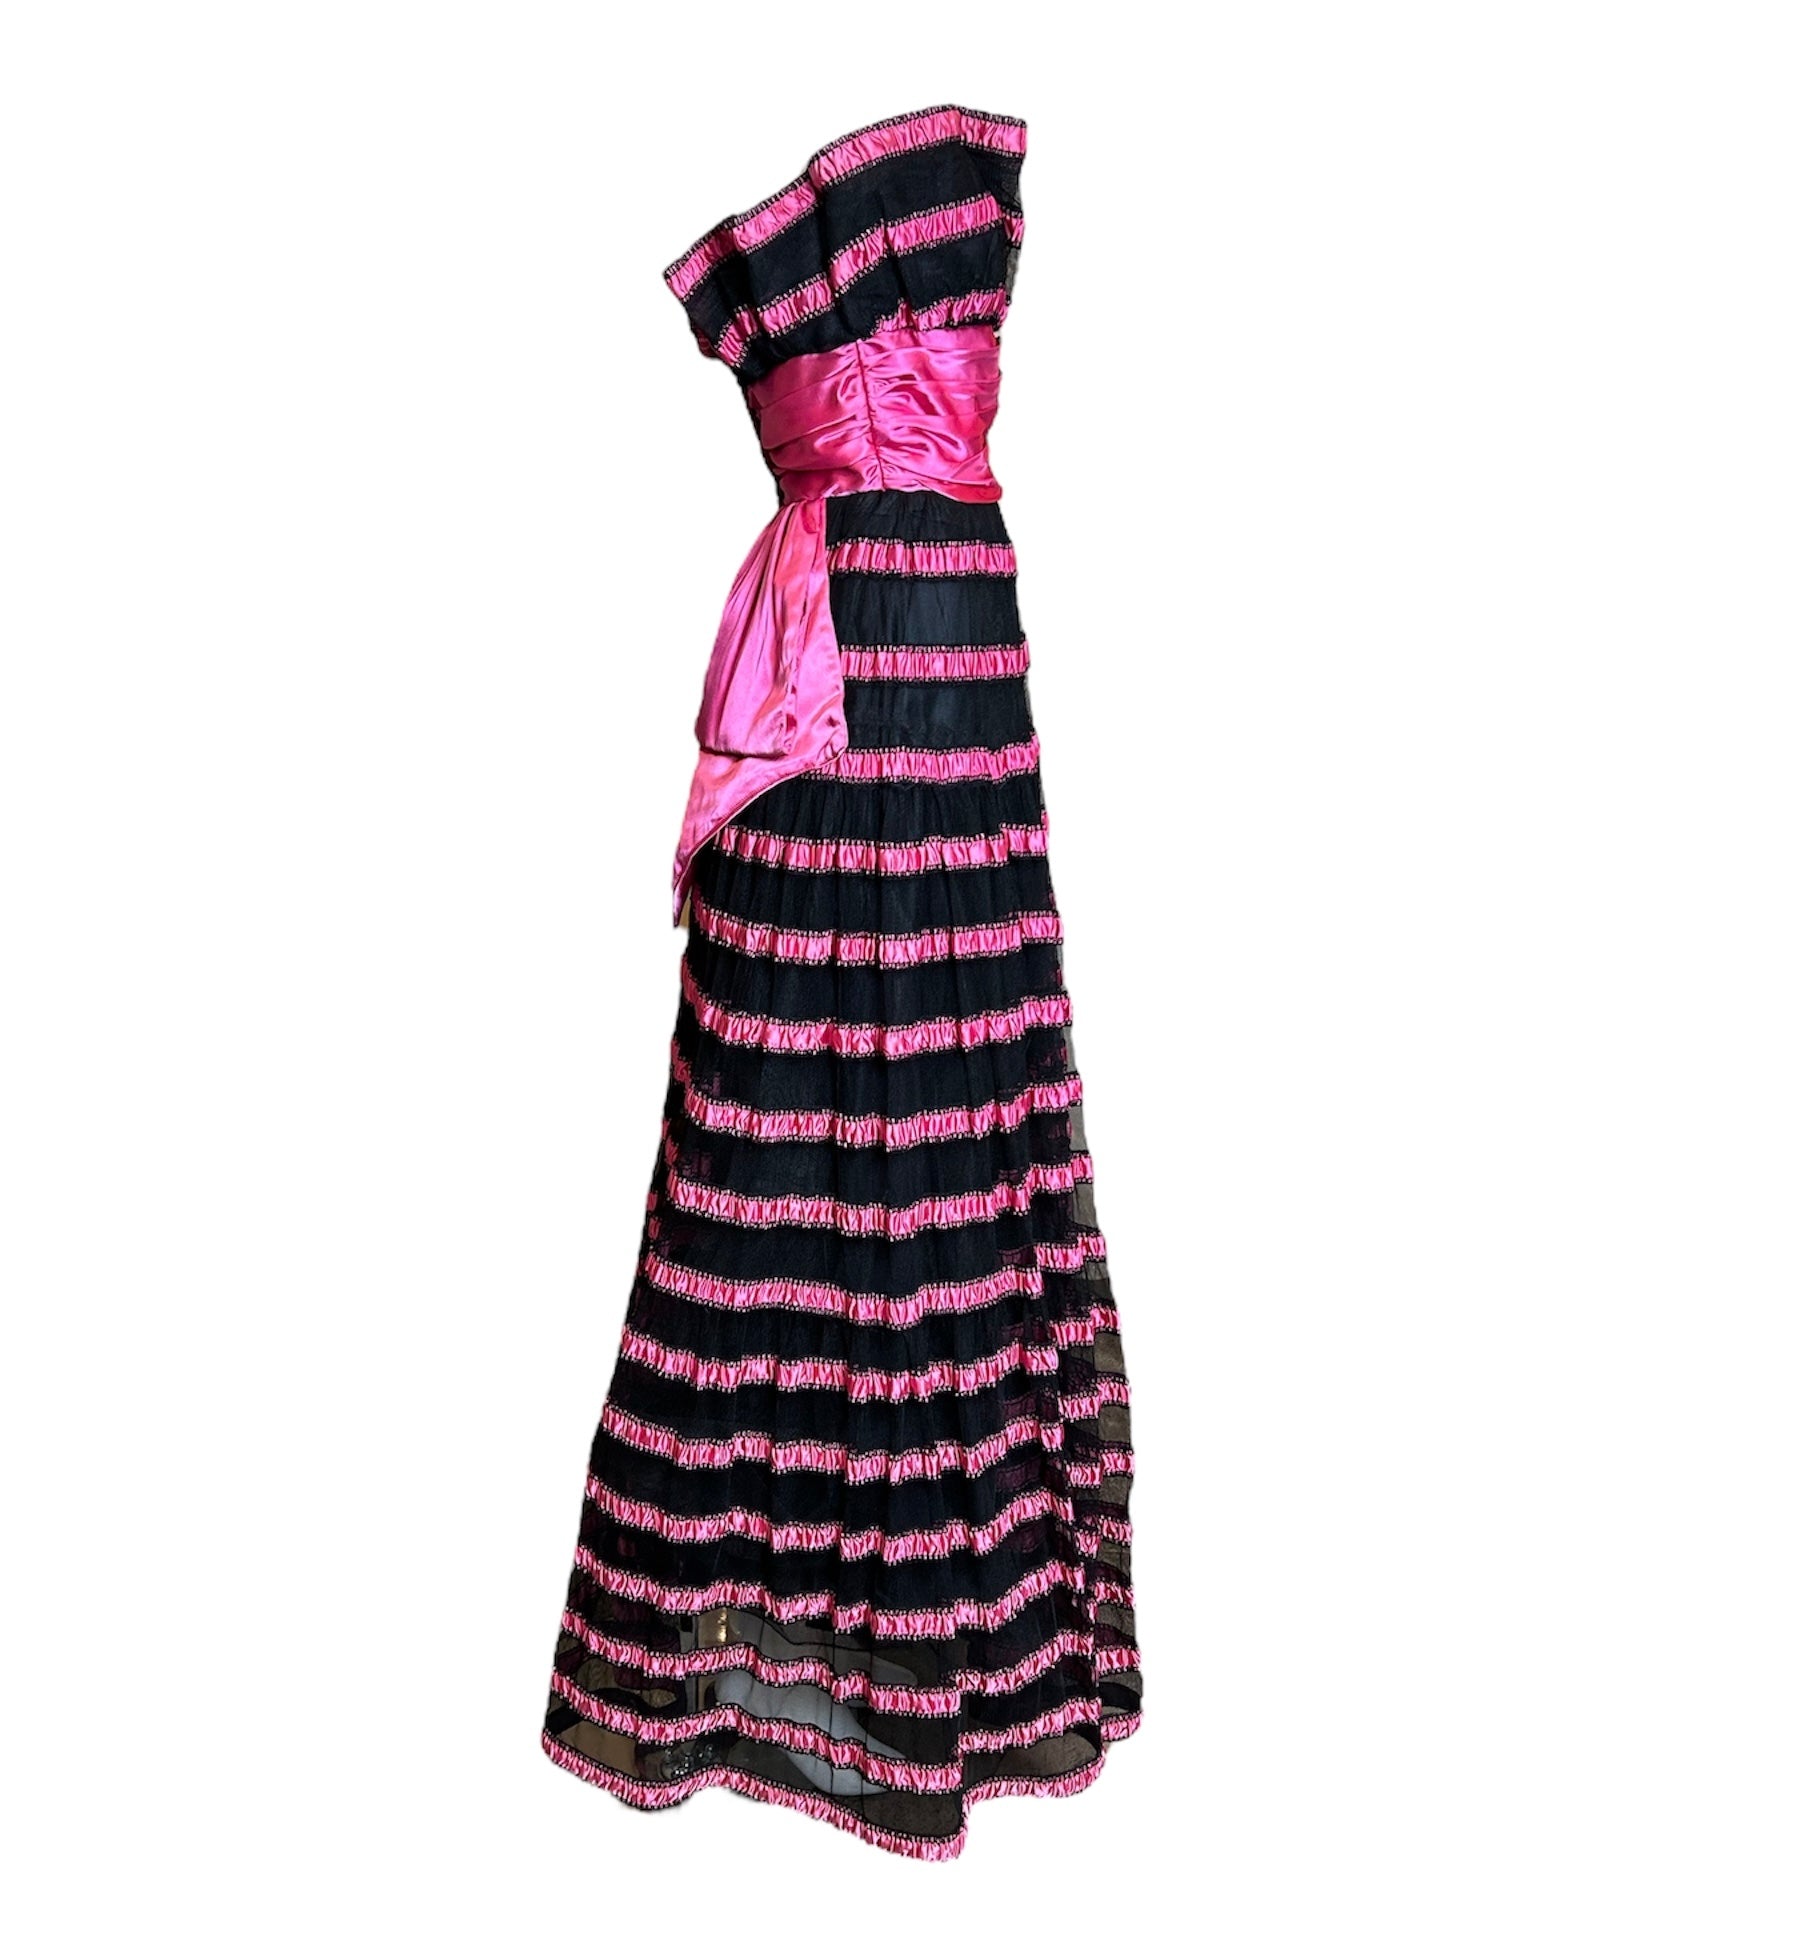 David Feldman 80s Pink & Black Ballgown SIDE PHOTO 2 OF 3